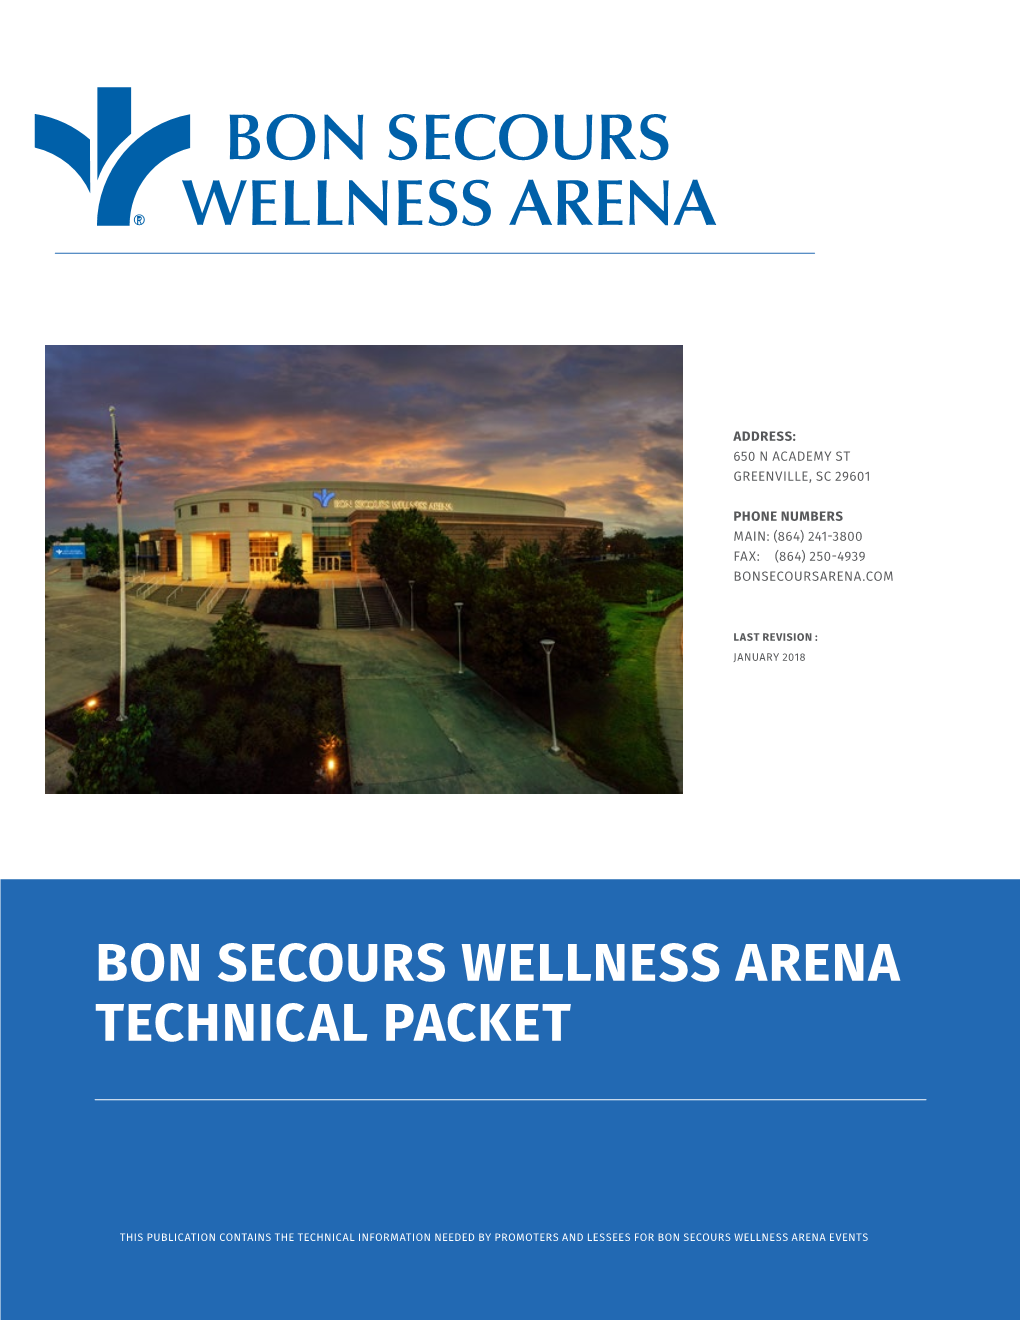 Bon Secours Wellness Arena Technical Packet